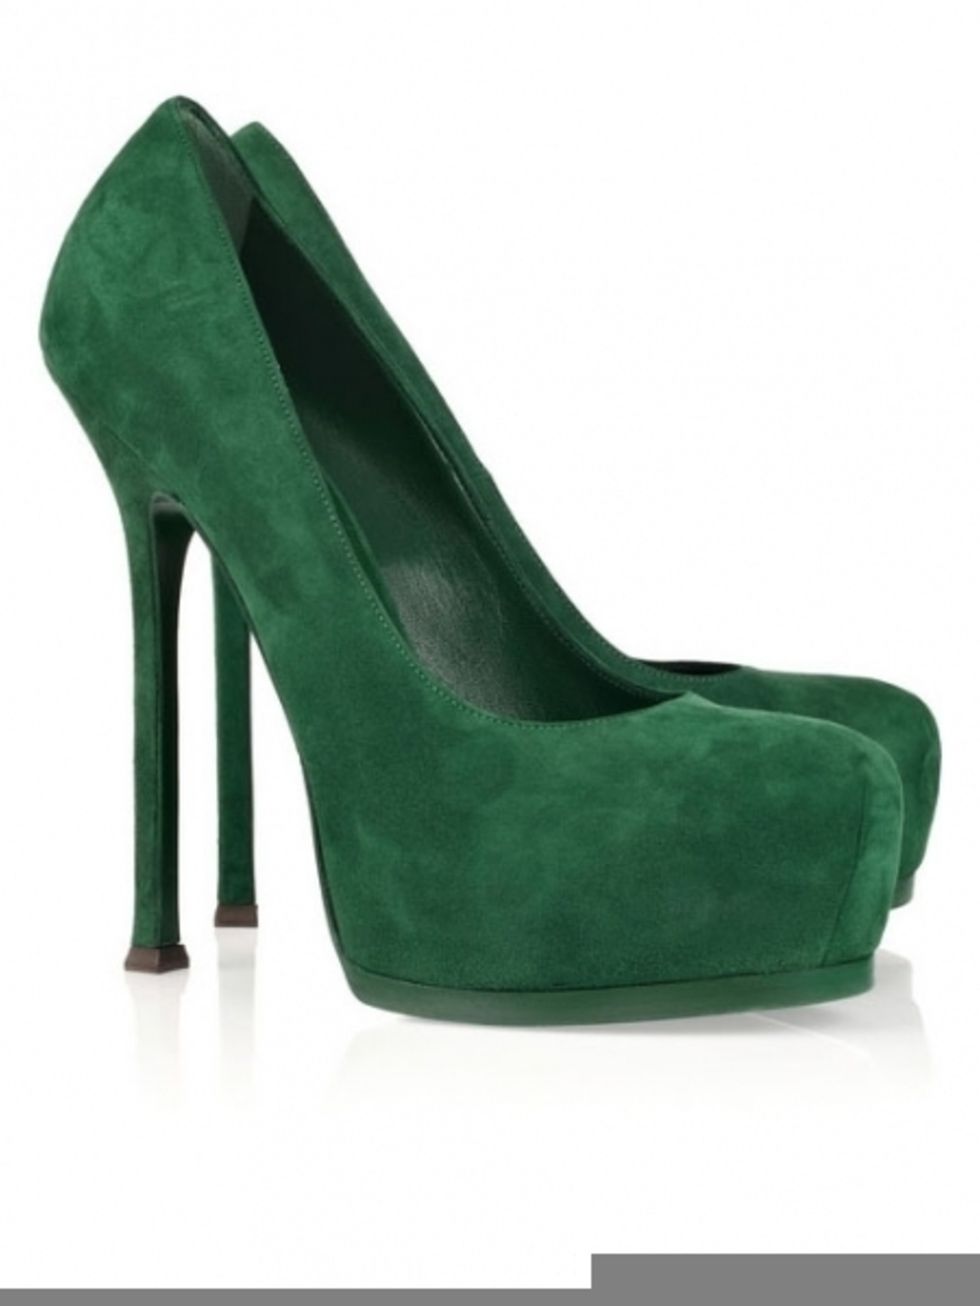 Footwear, High heels, Green, Teal, Basic pump, Aqua, Tan, Beige, Sandal, Court shoe, 